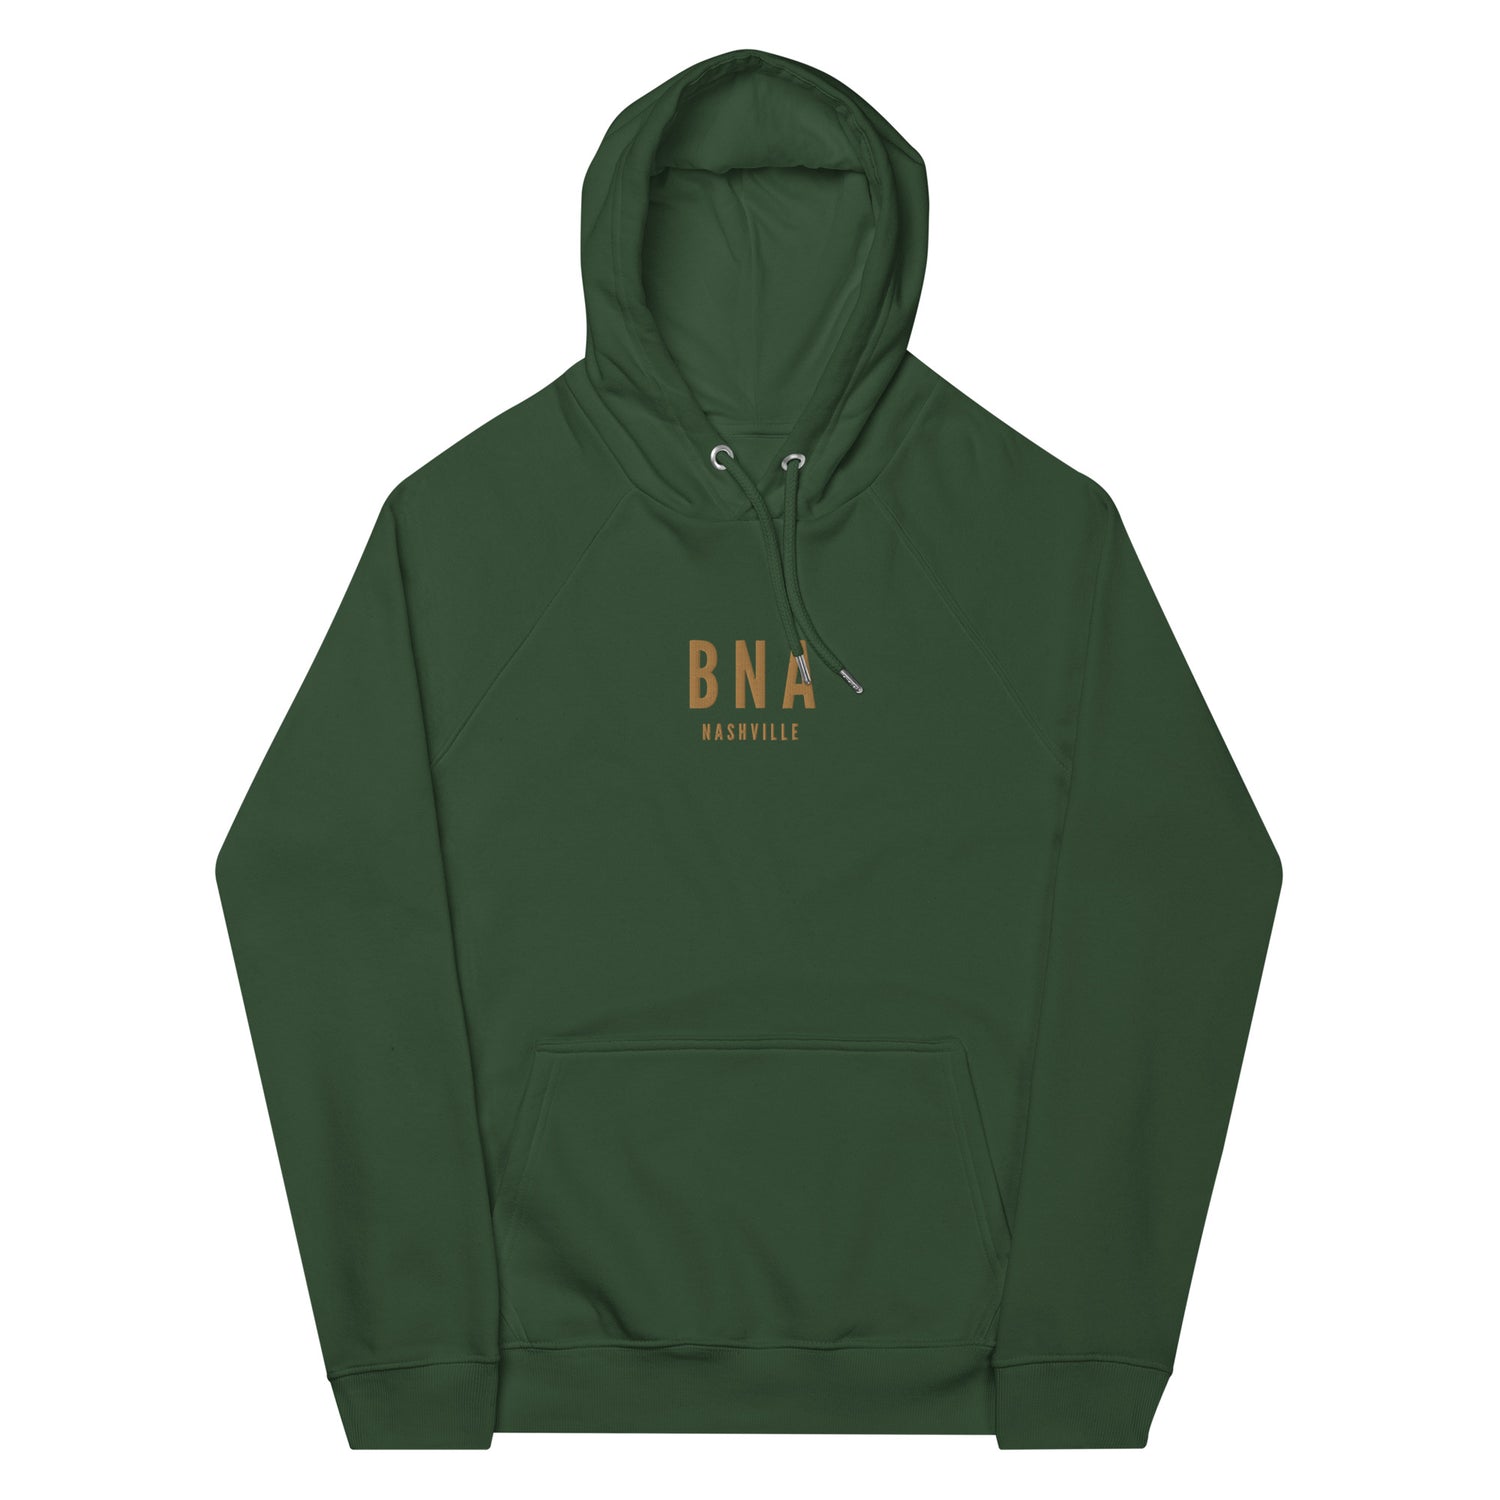 Nashville Tennessee Hoodies and Sweatshirts • BNA Airport Code